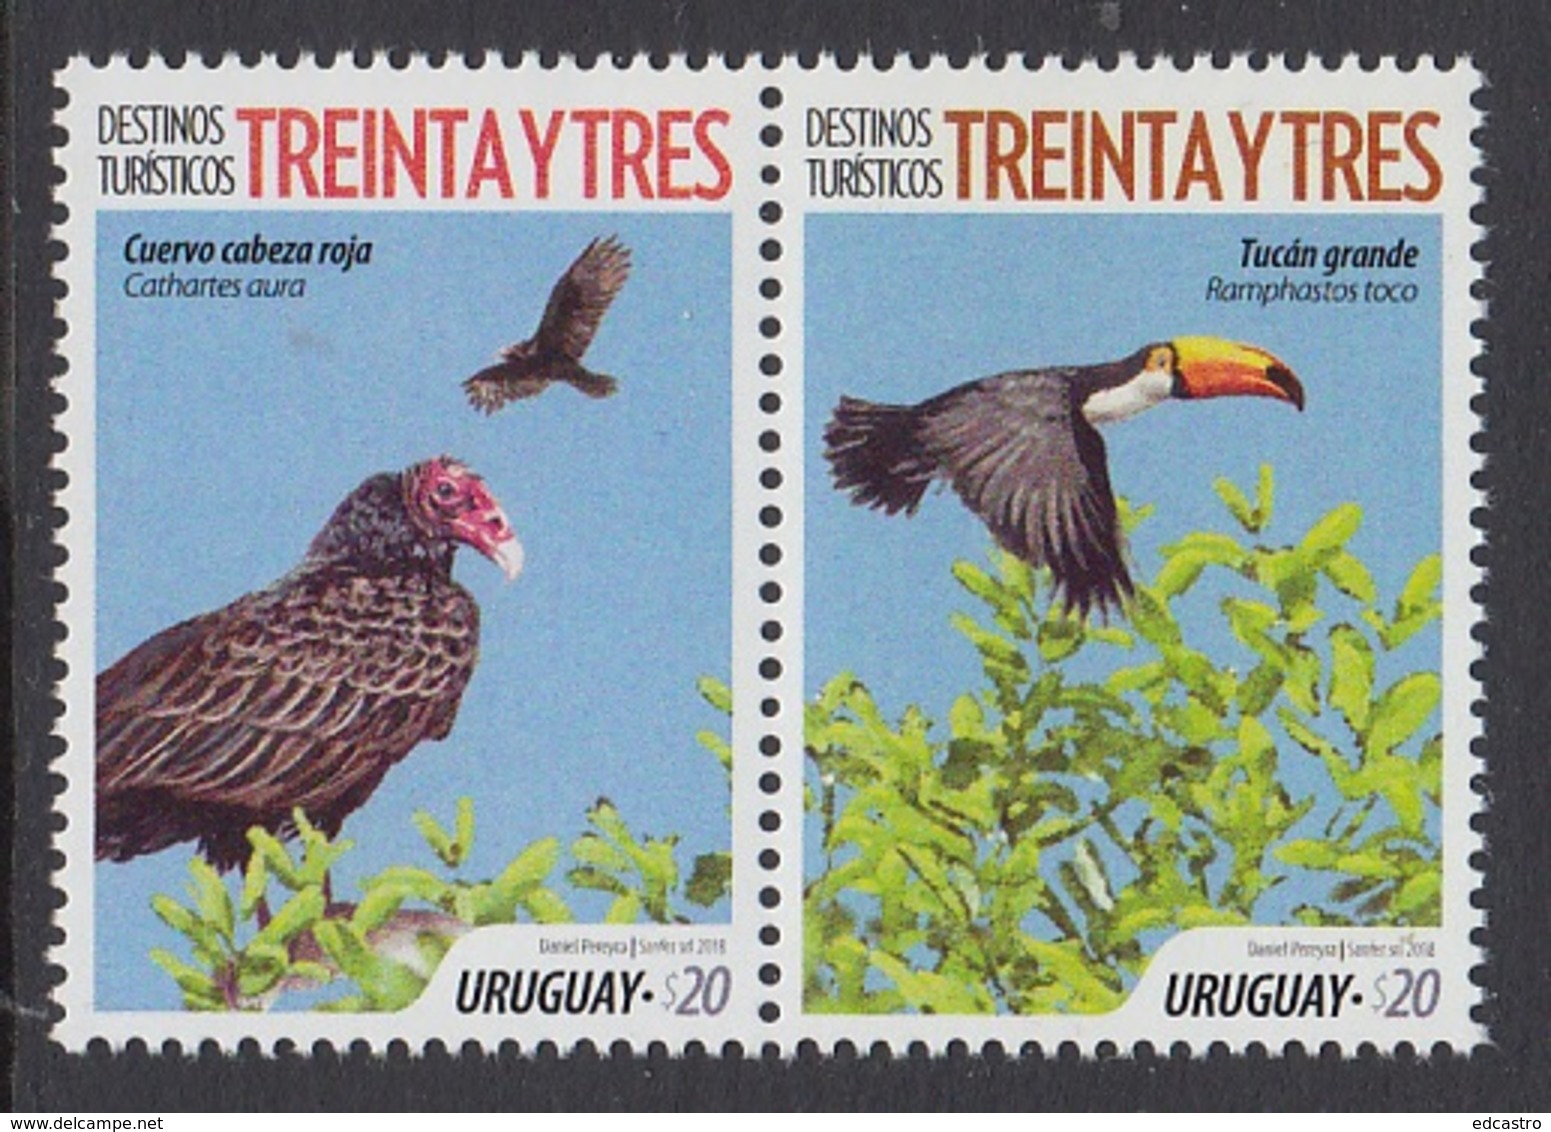 8.- URUGUAY 2018 TURISTICS SITES BIRDS - Uruguay